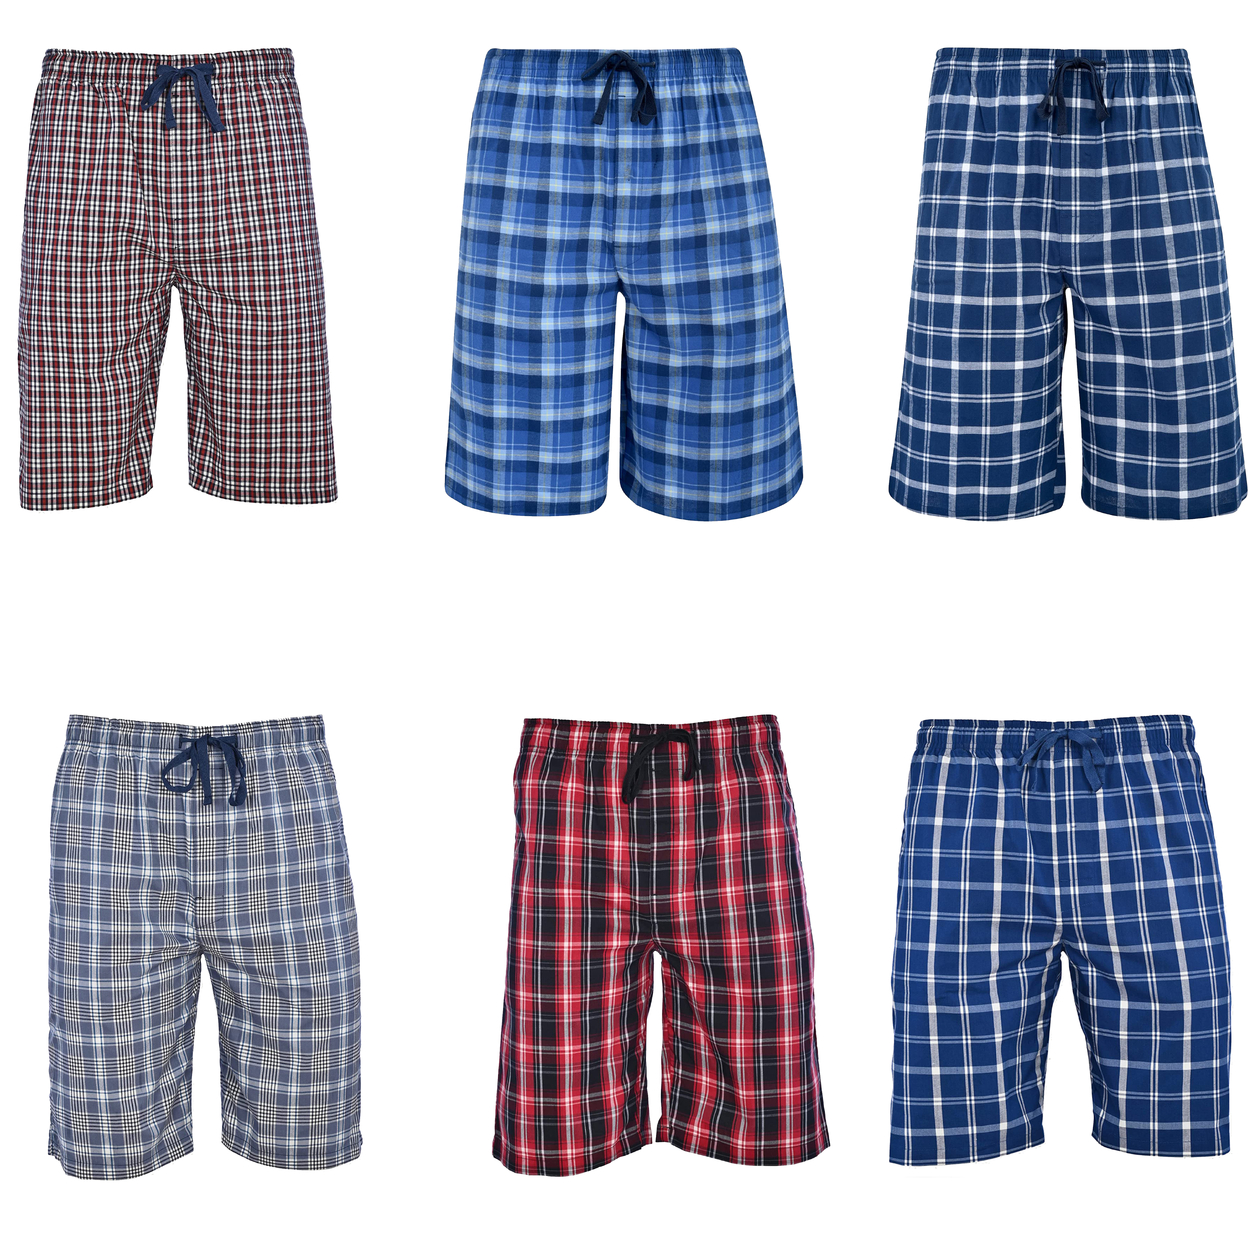 Men's Ultra-Soft Plaid Lounge Pajama Sleep Wear Shorts - Red, Large